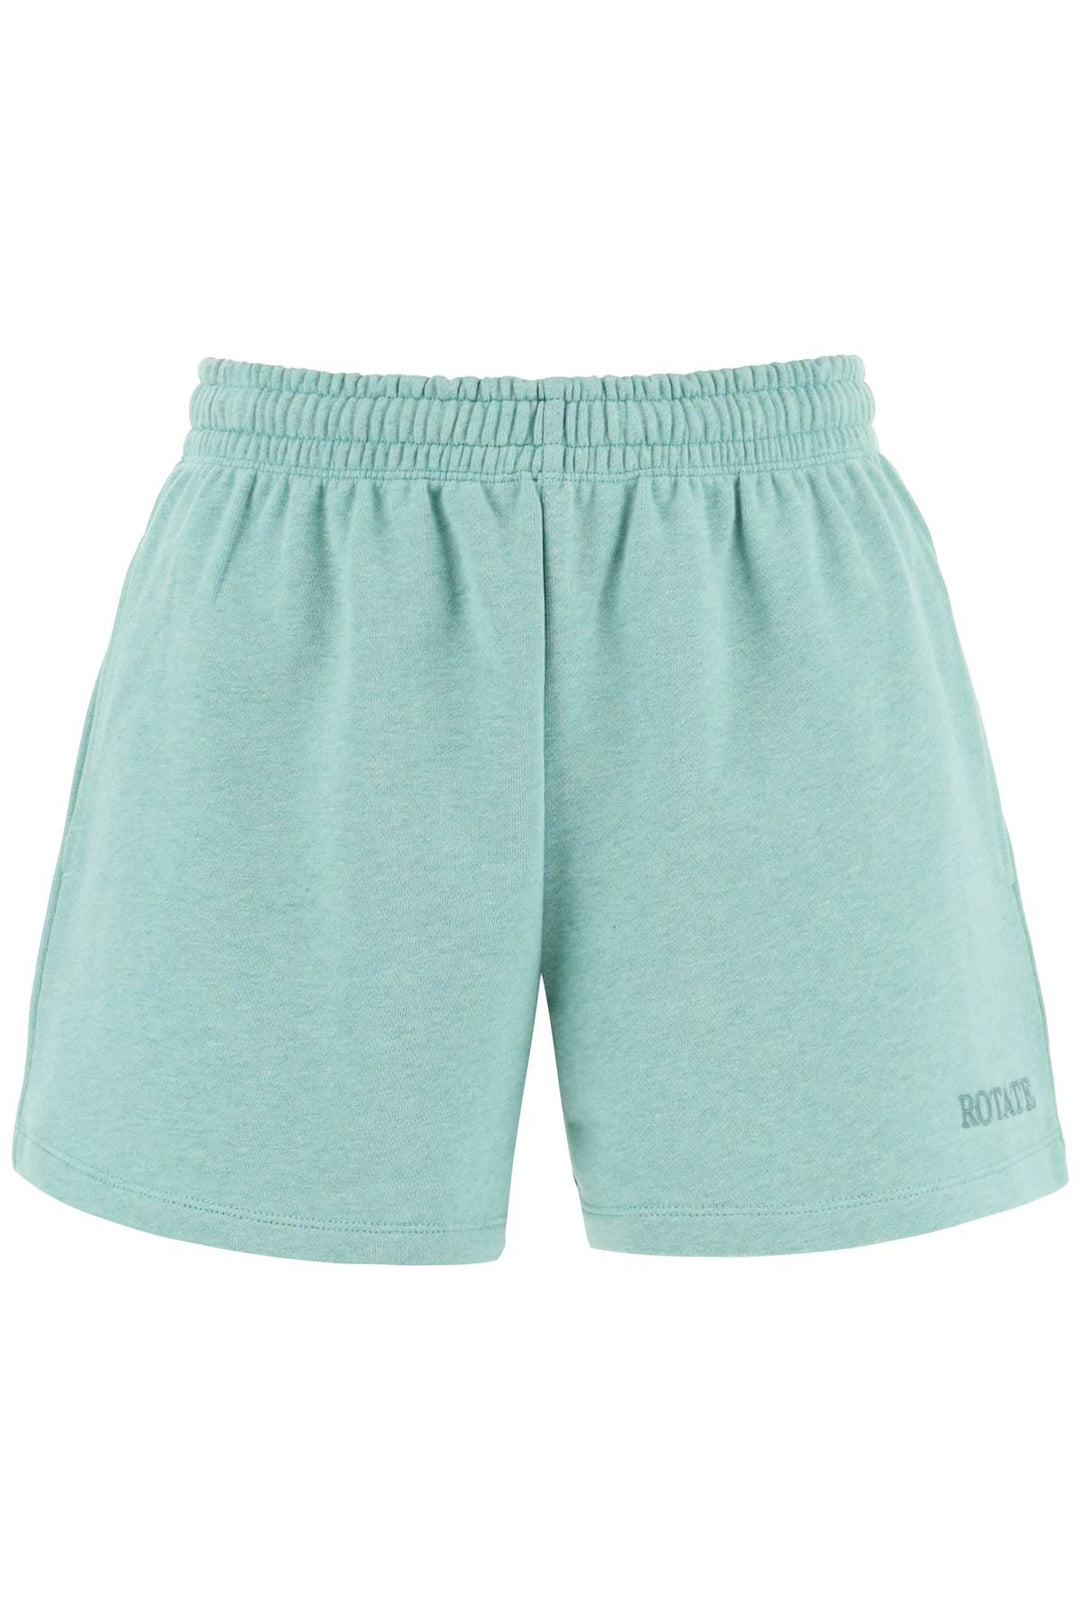 organic cotton sports shorts for men-0